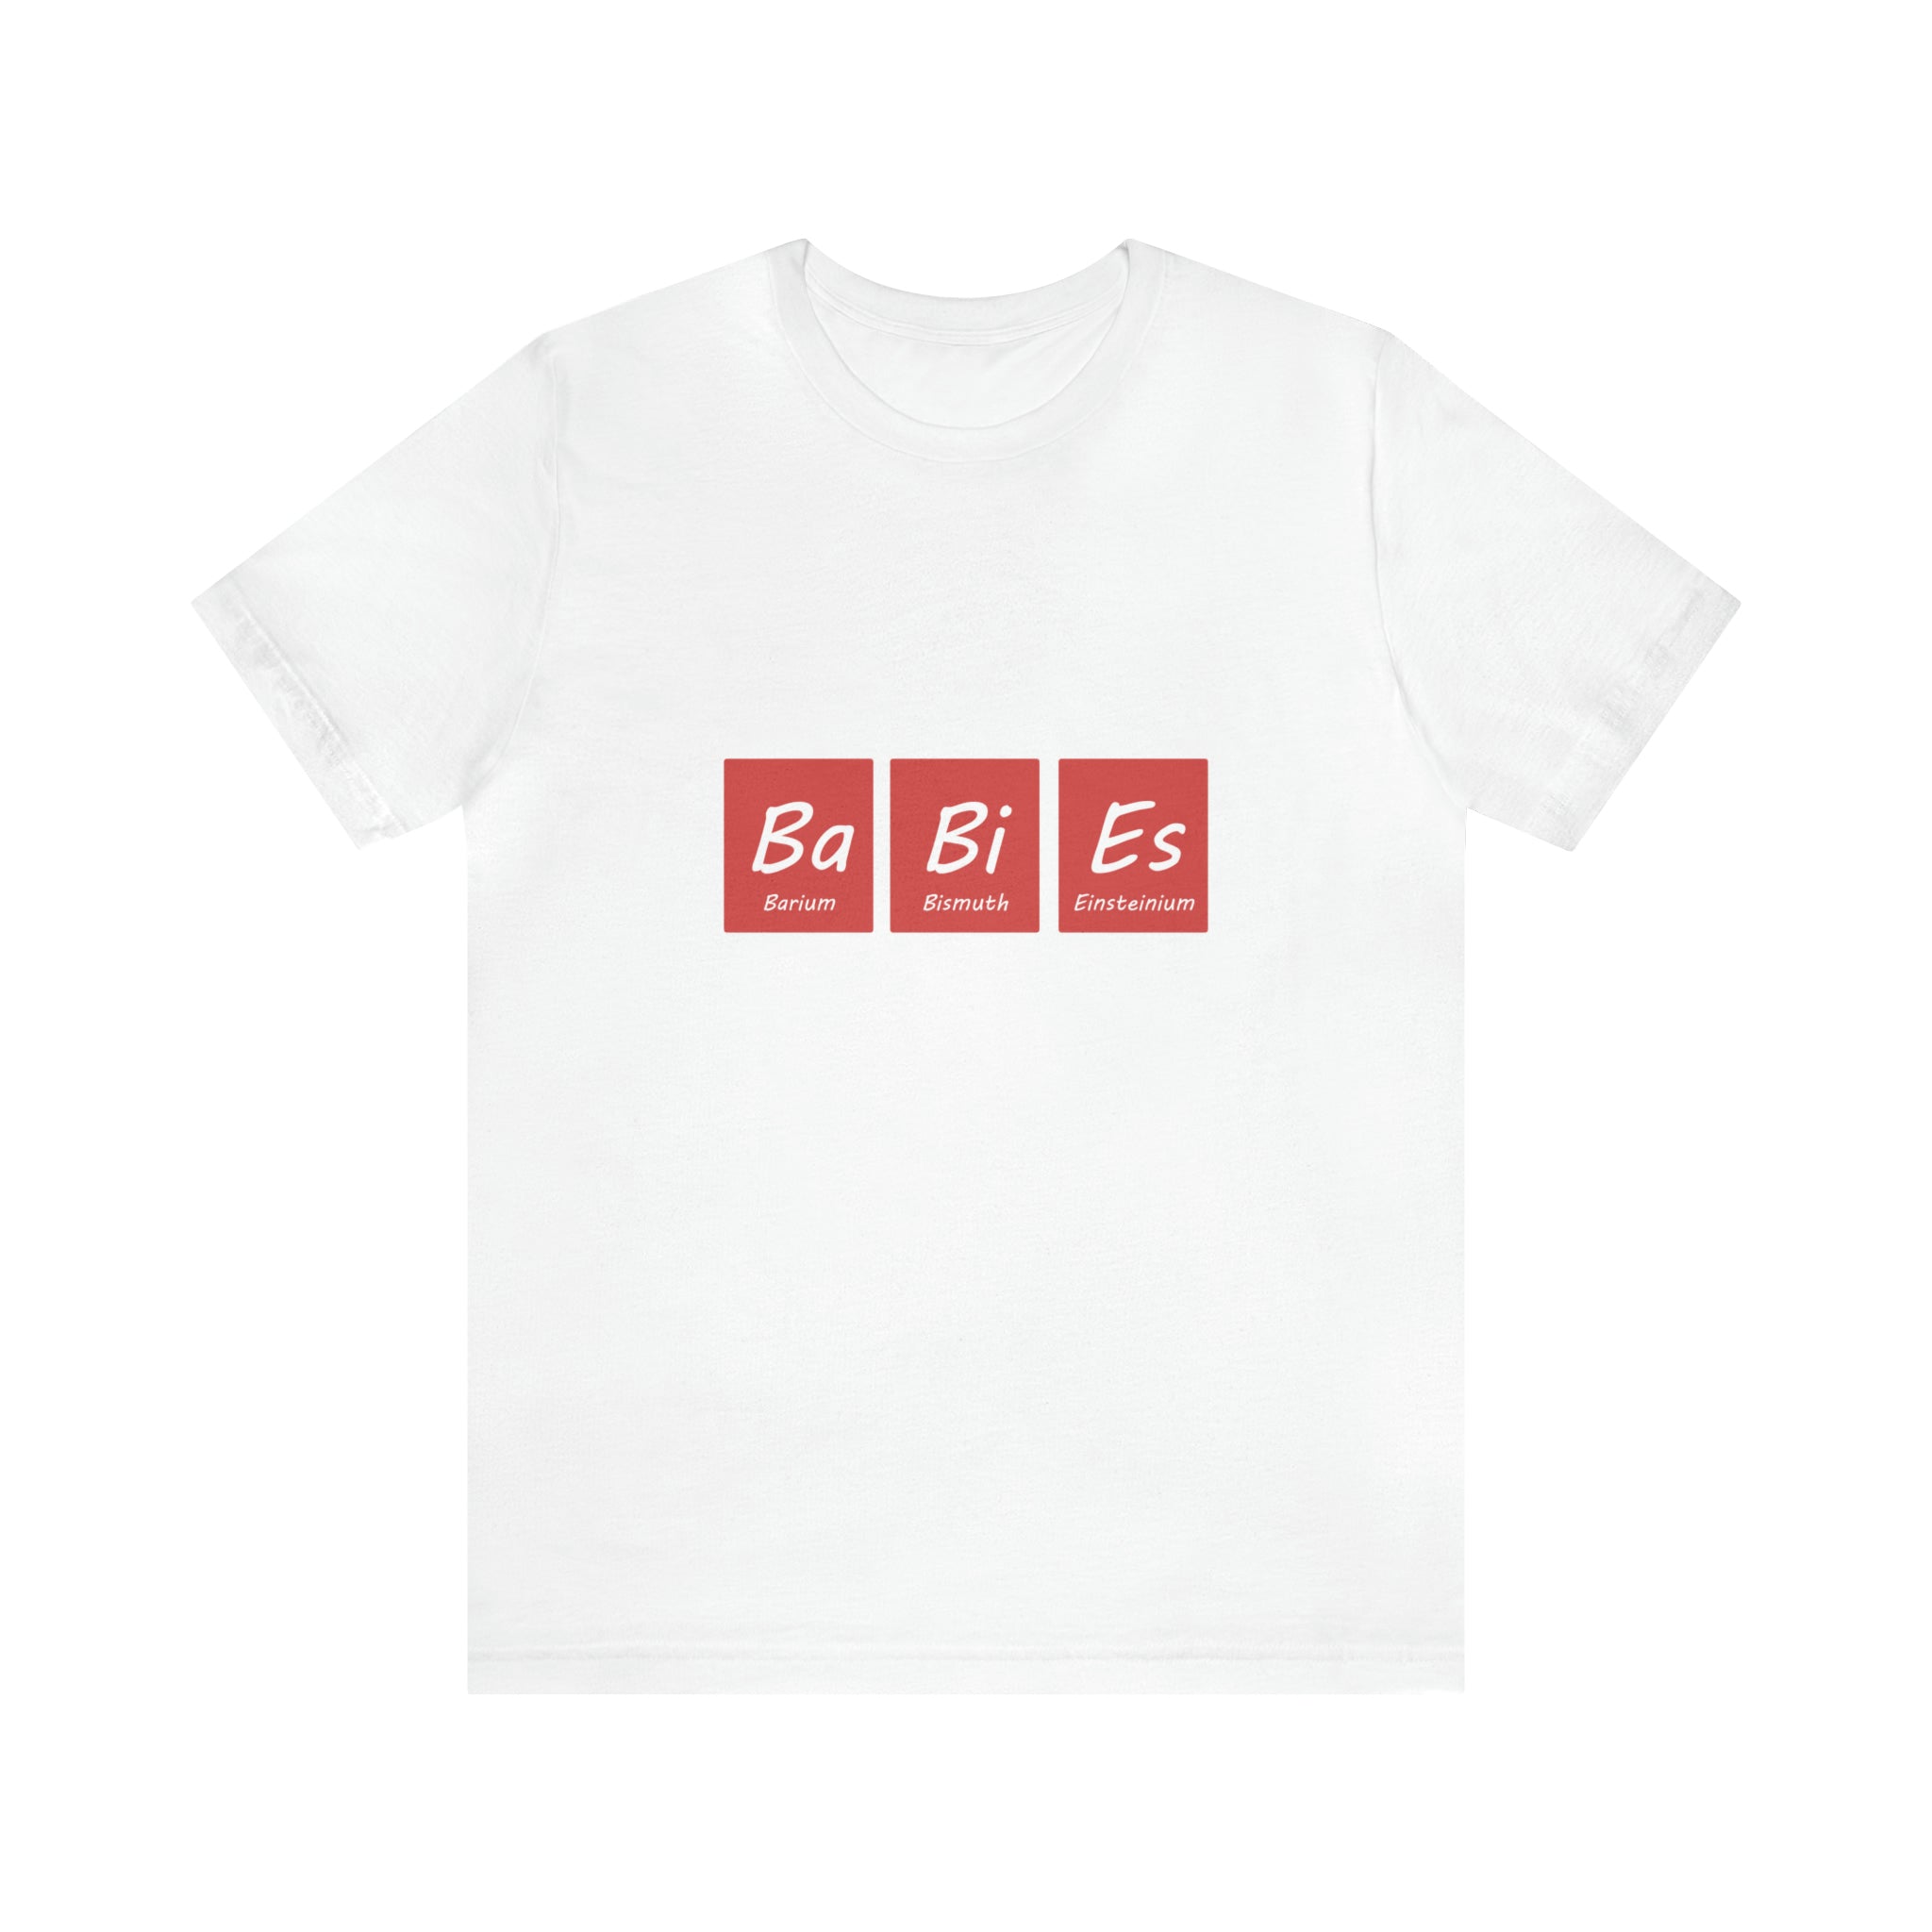 A Ba - Bi - Es T-Shirt, showcasing a unique color combination.